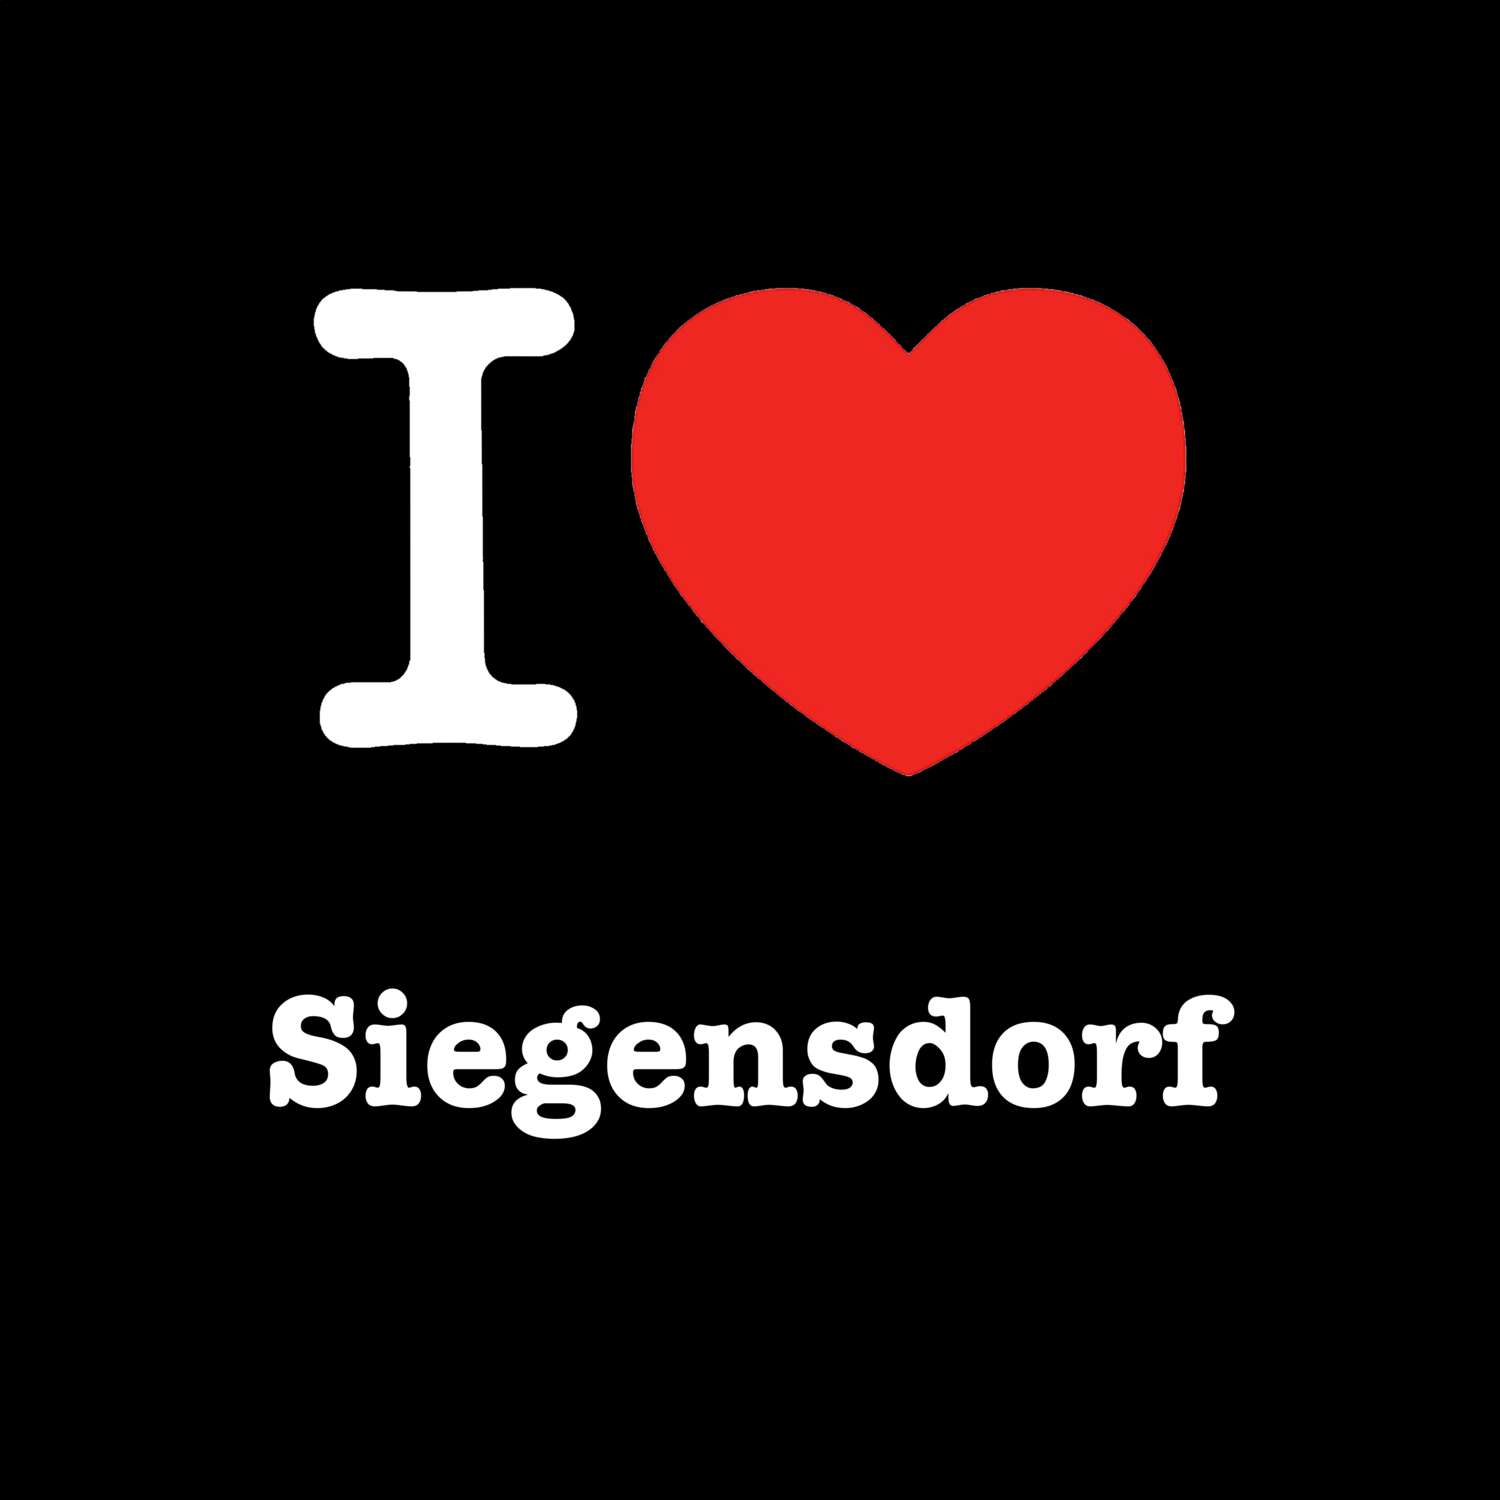 Siegensdorf T-Shirt »I love«